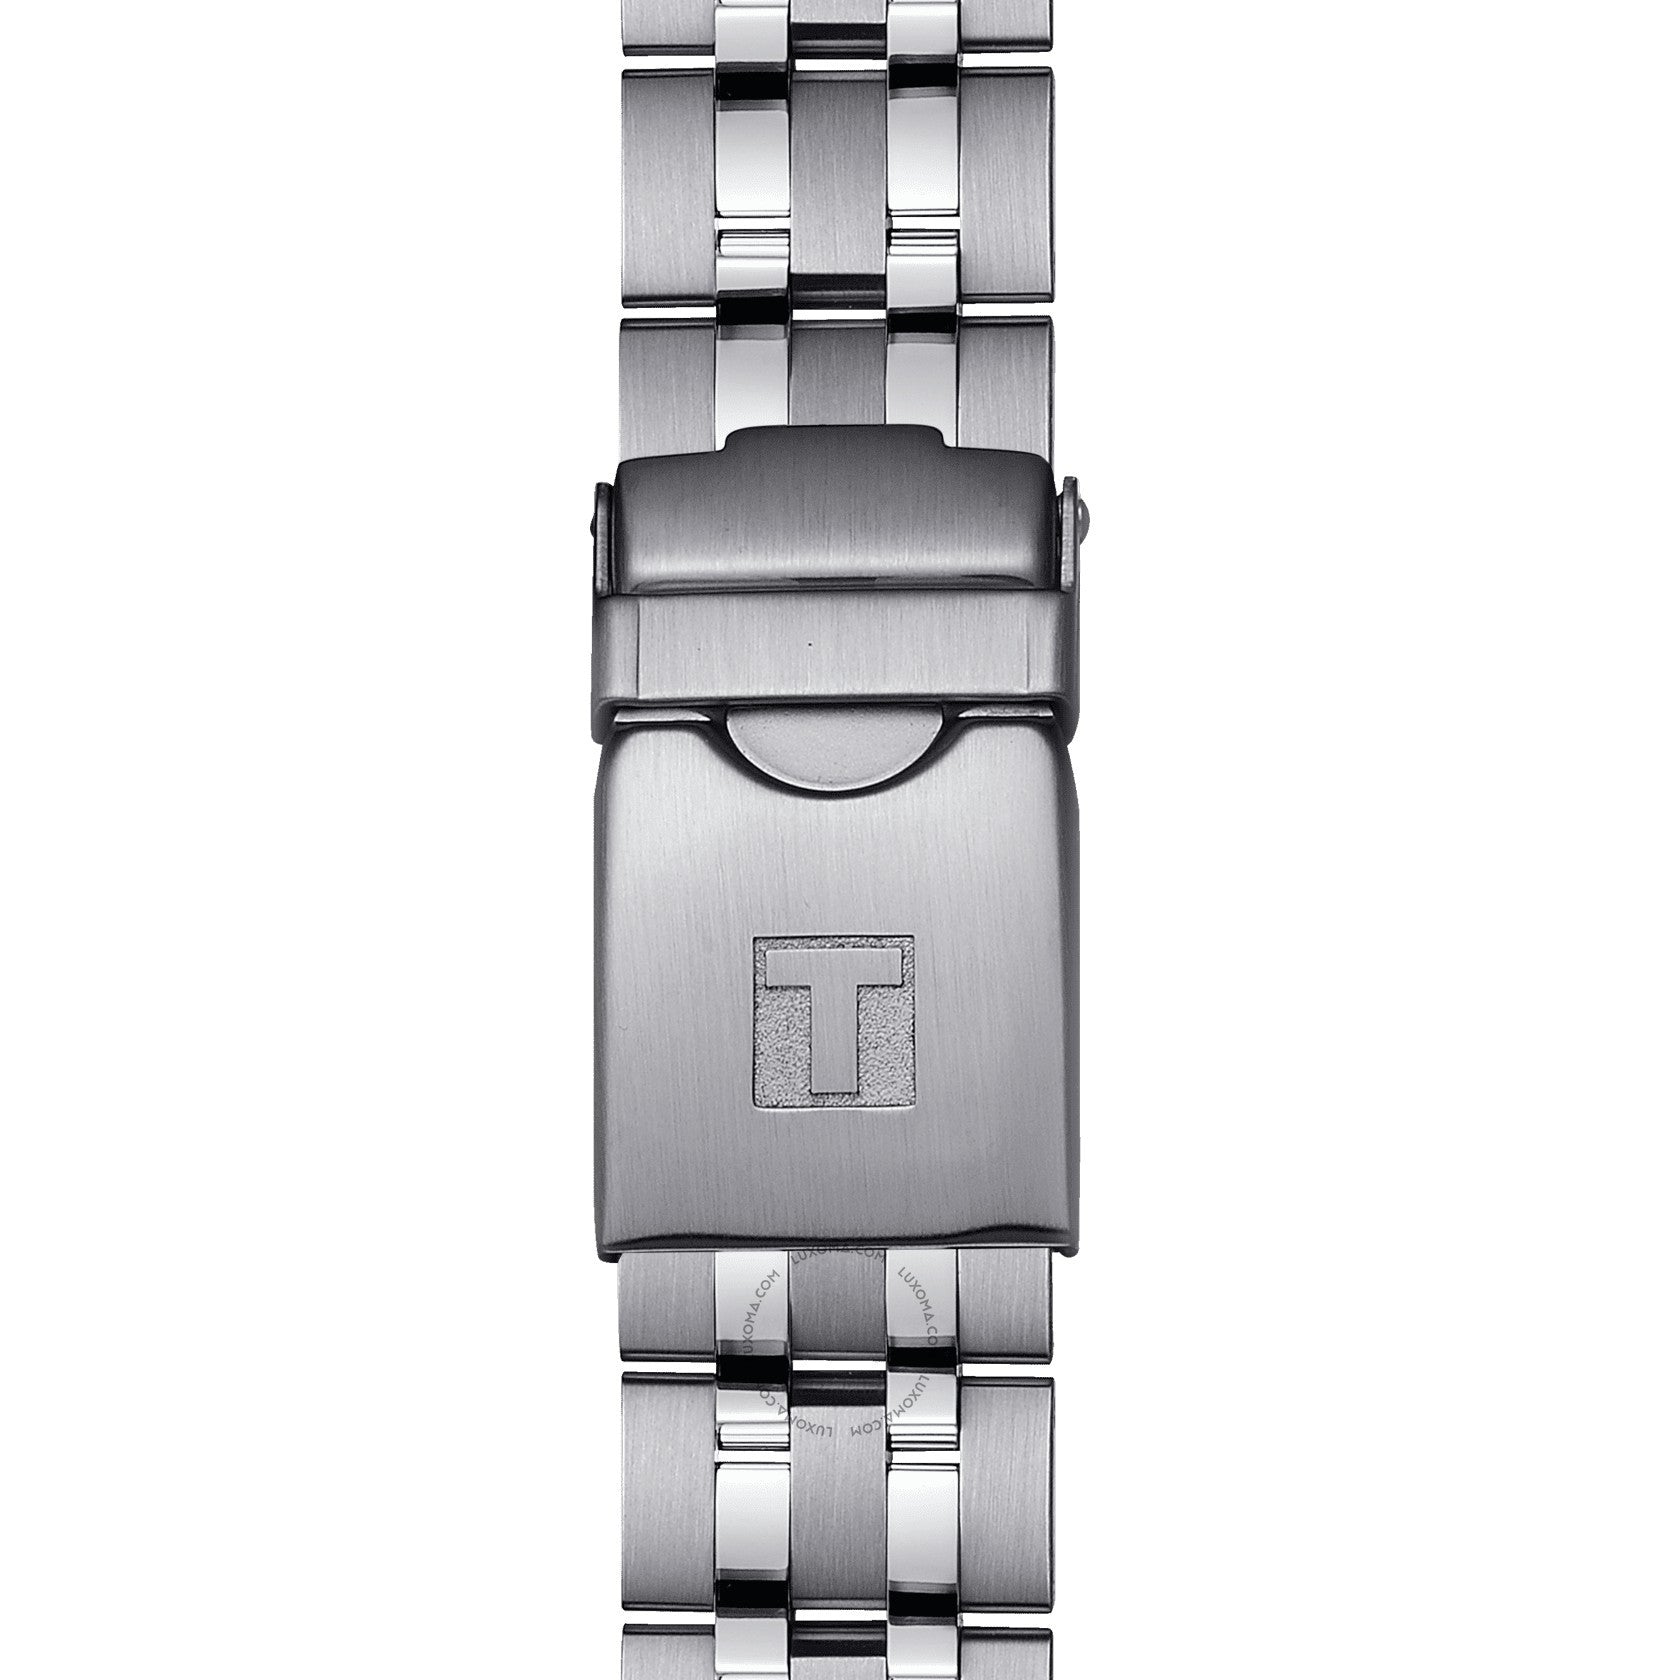 Tissot Tissot Powermatic 80 Automatic Black Dial Men's Watch T055.430.11.057.00